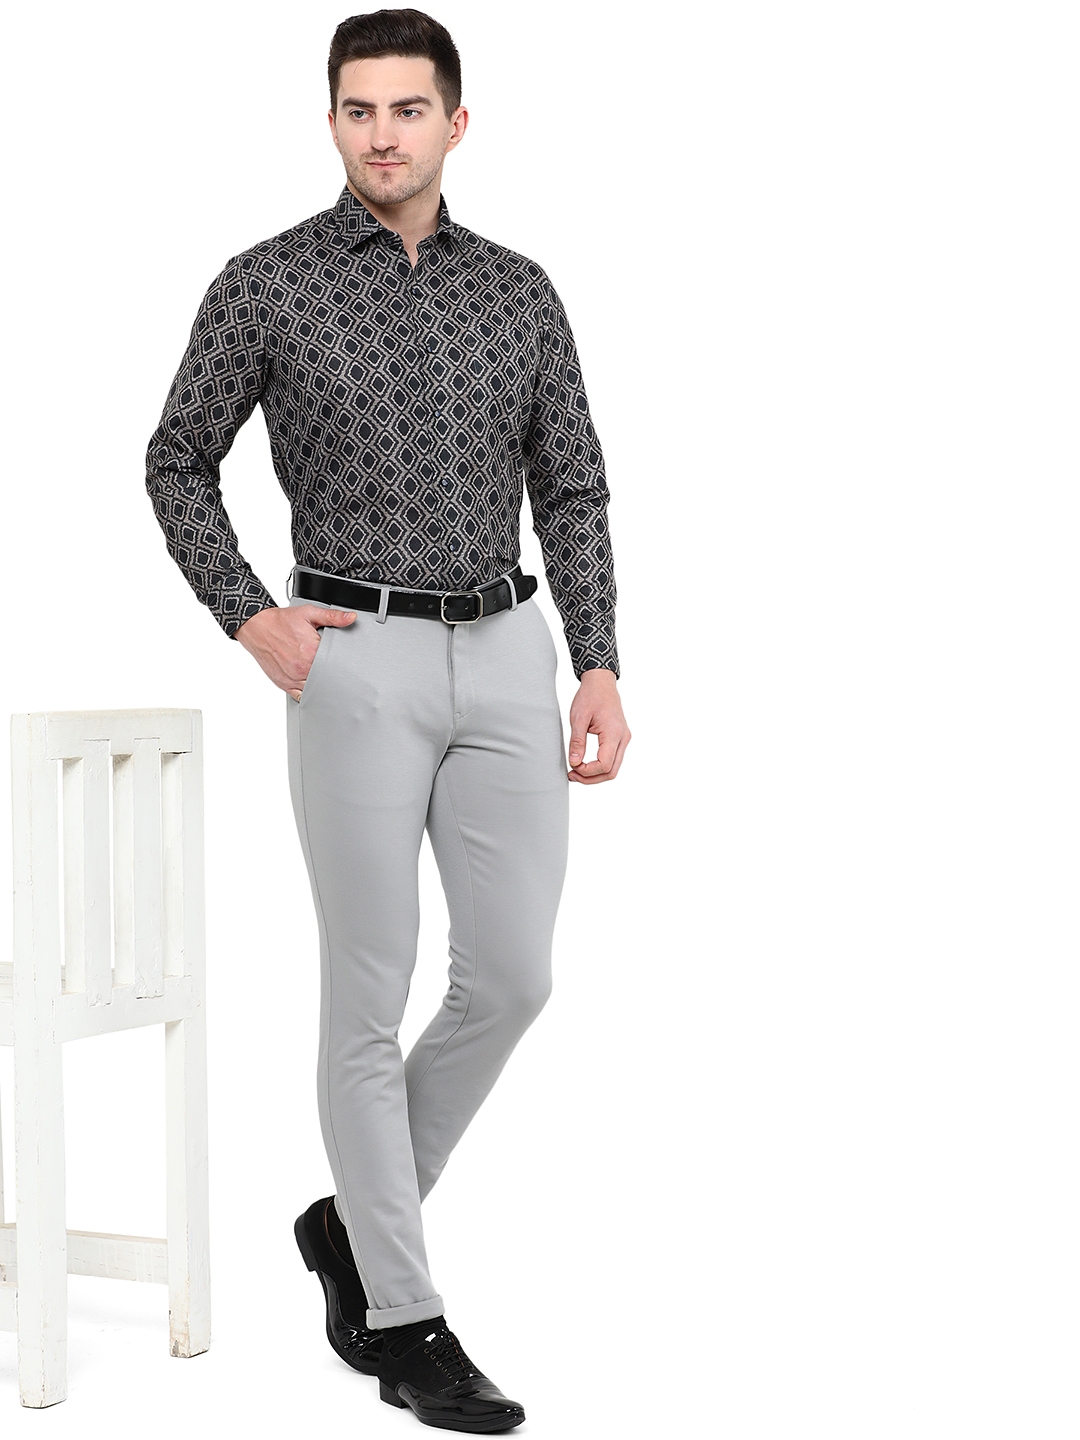 Greenfibre | Black & Grey Printed Slim Fit Party Wear Shirt | Greenfibre 3